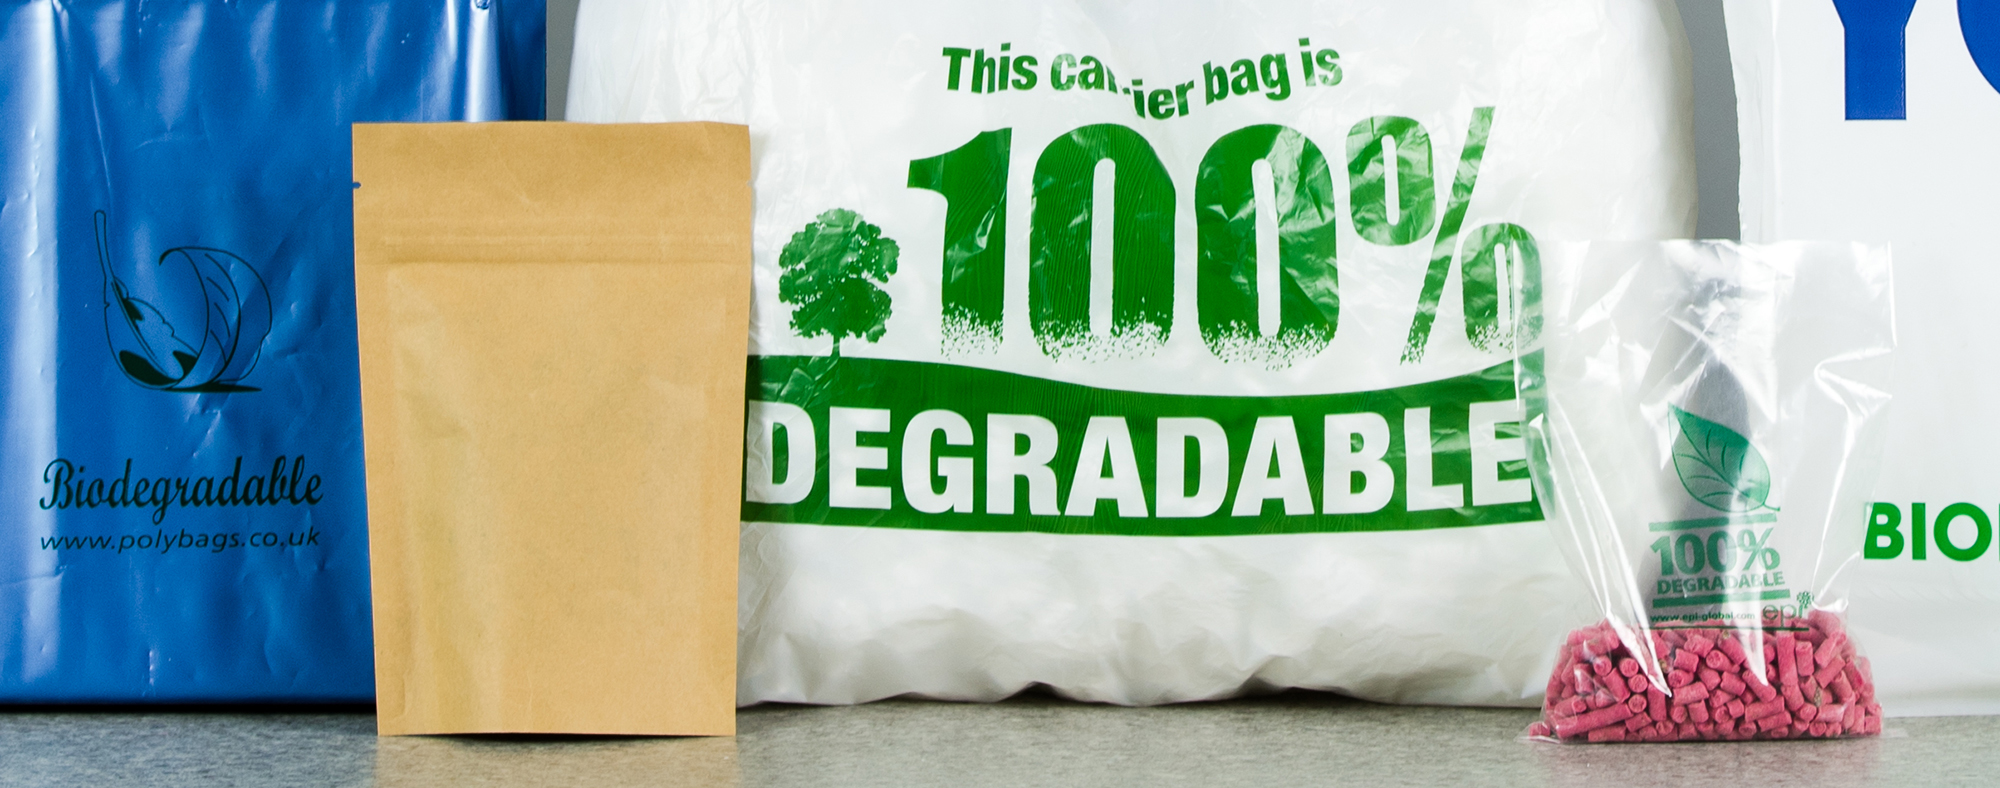 Bio-additive bags